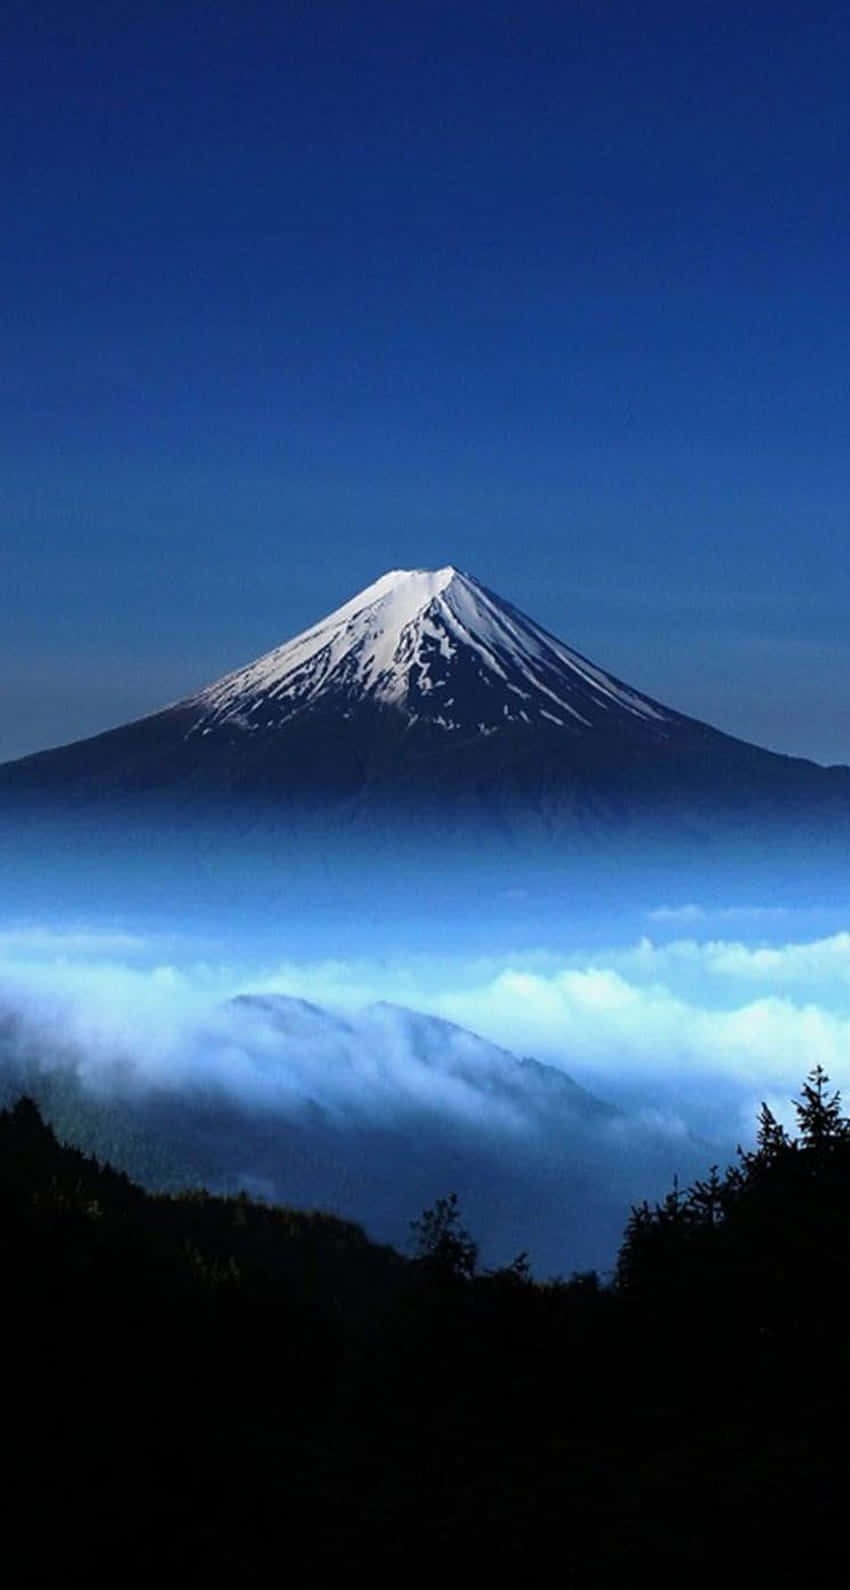 Mount Fuji Scenery In Japan Wallpaper